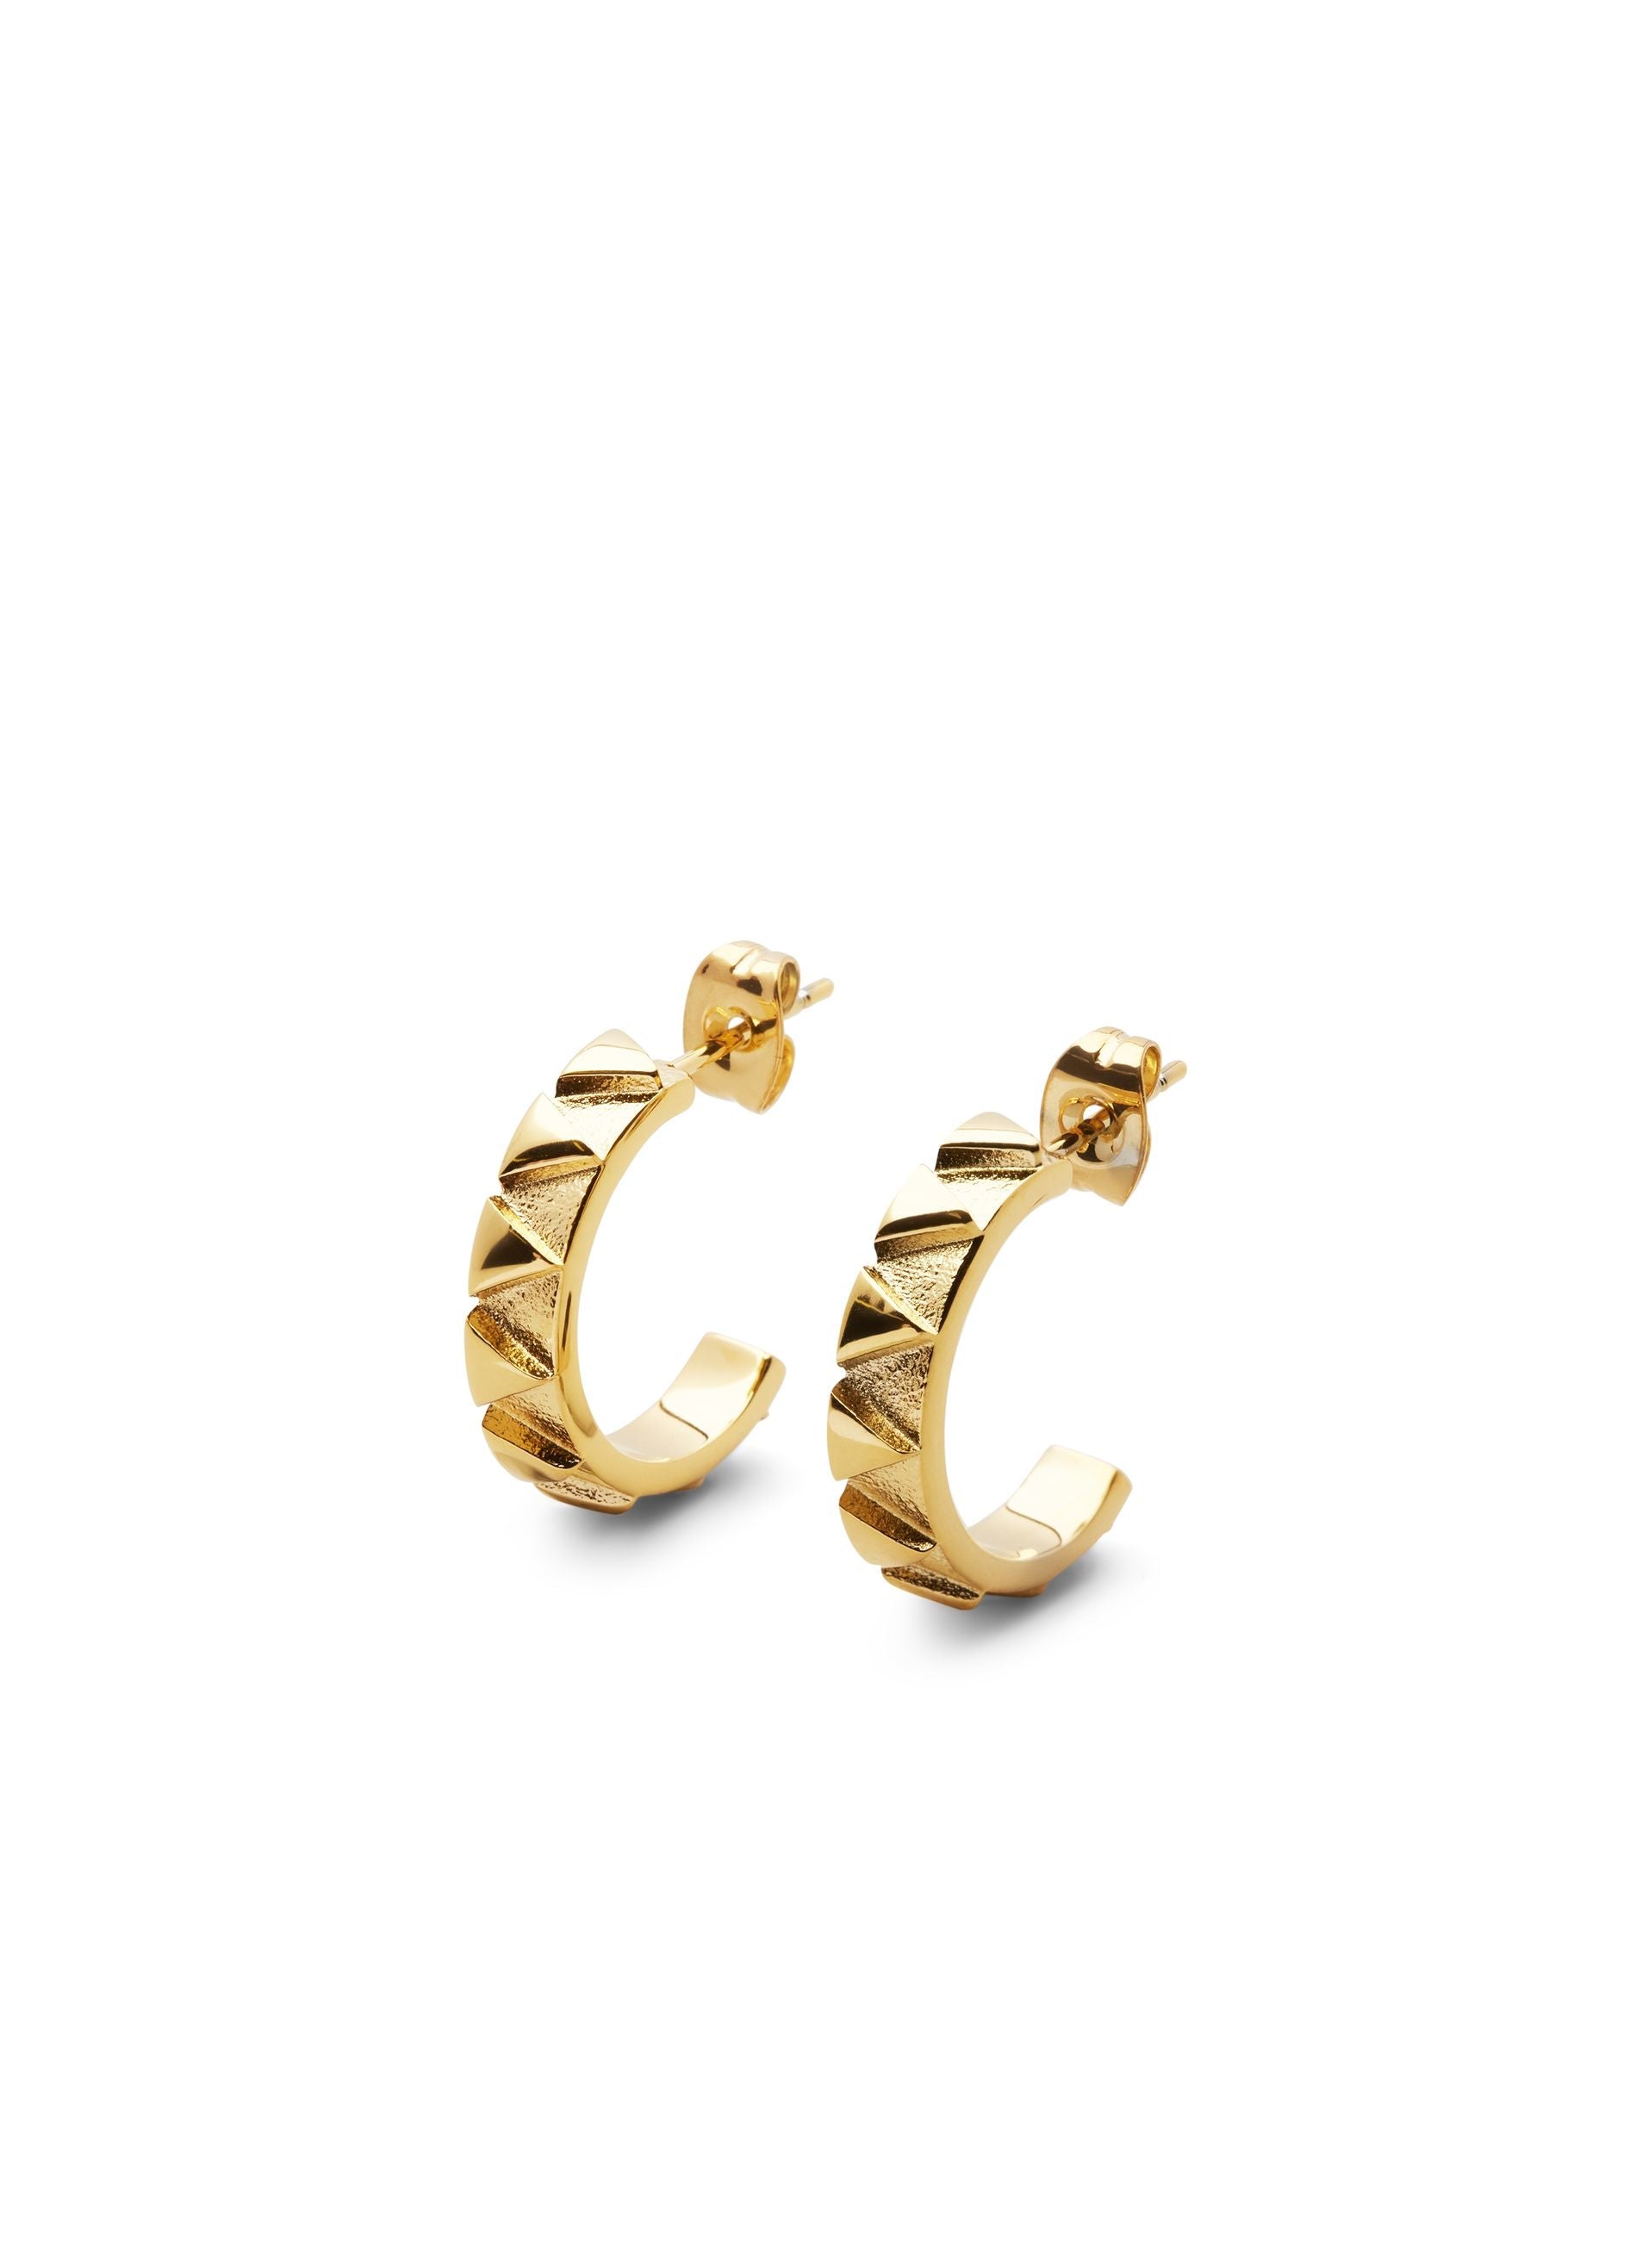 Skultuna Gtg Earrings, Gold Plated